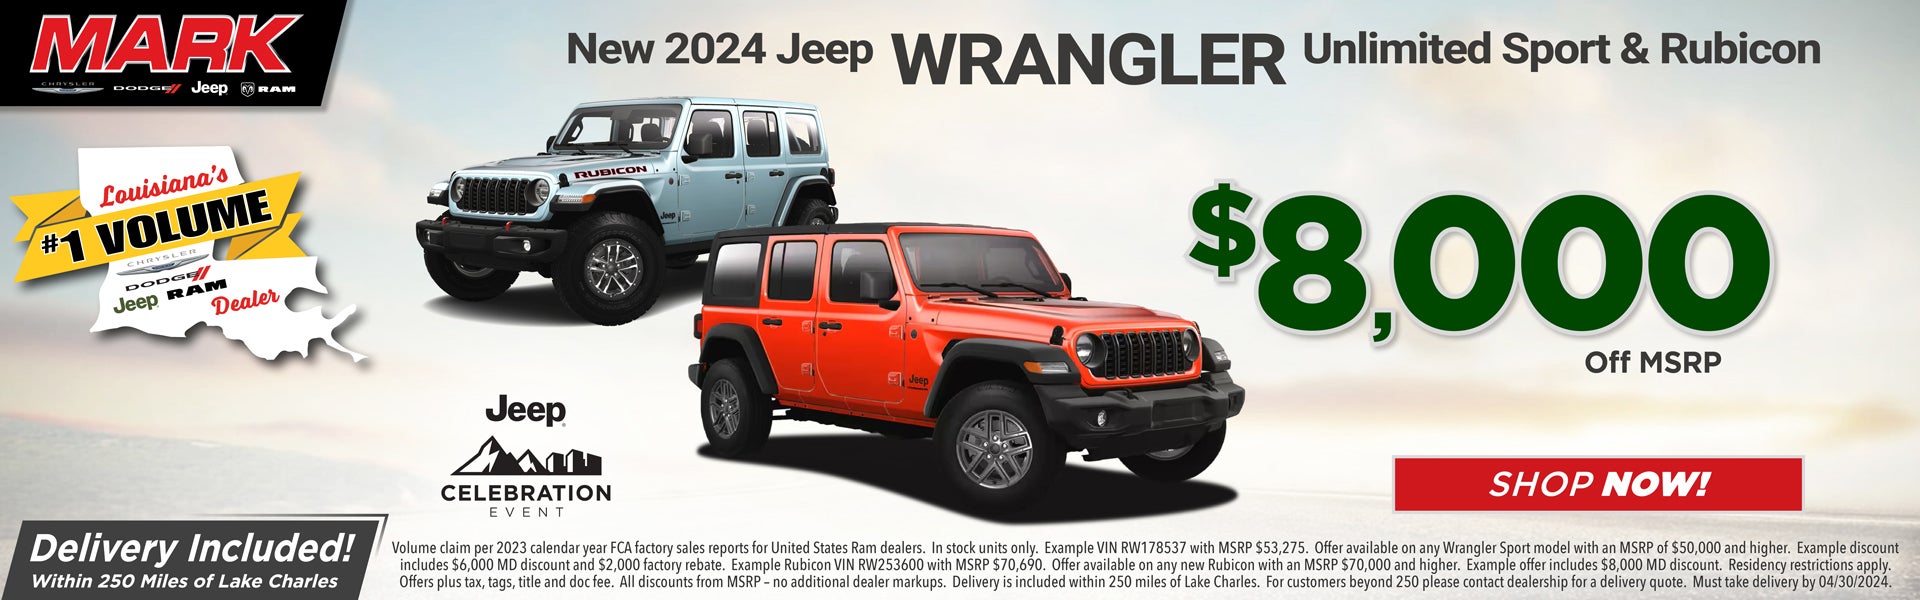 Jeep Wrangler Unlimited Sport & Rubicon